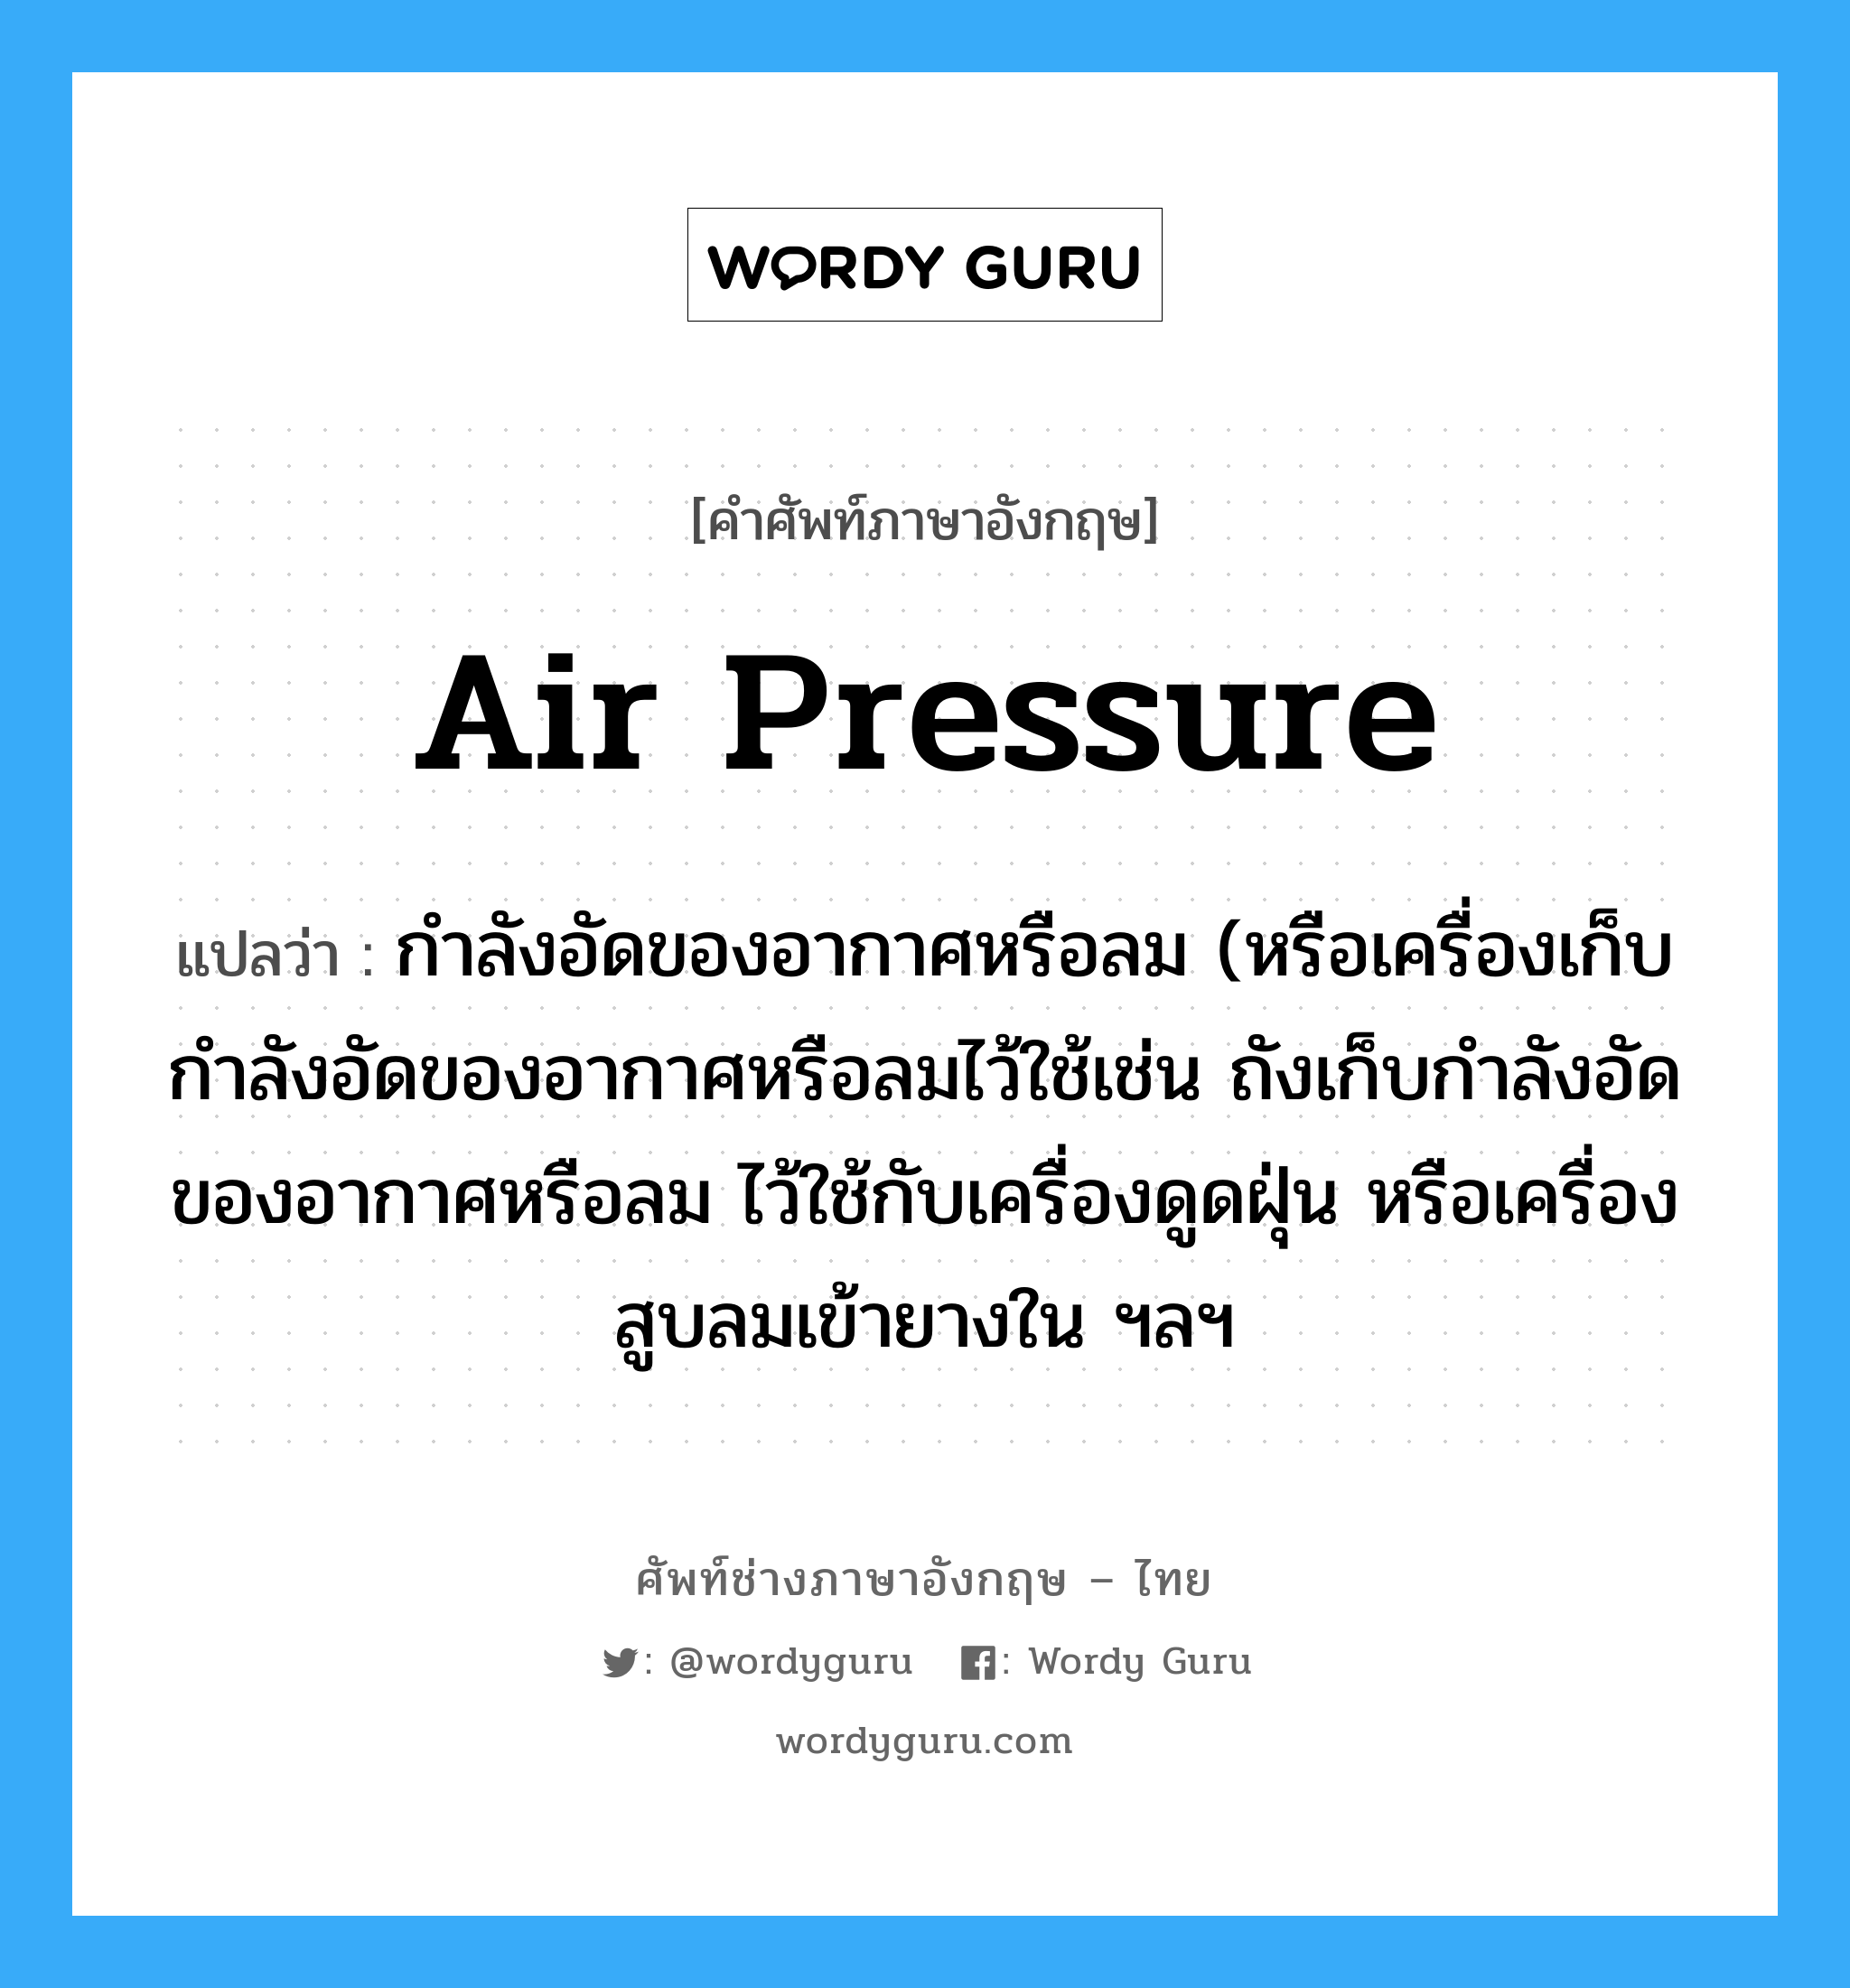 air pressure แปลว่า?, คำศัพท์ช่างภาษาอังกฤษ - ไทย air pressure คำศัพท์ภาษาอังกฤษ air pressure แปลว่า กำลังอัดของอากาศหรือลม (หรือเครื่องเก็บกำลังอัดของอากาศหรือลมไว้ใช้เช่น ถังเก็บกำลังอัดของอากาศหรือลม ไว้ใช้กับเครื่องดูดฝุ่น หรือเครื่องสูบลมเข้ายางใน ฯลฯ